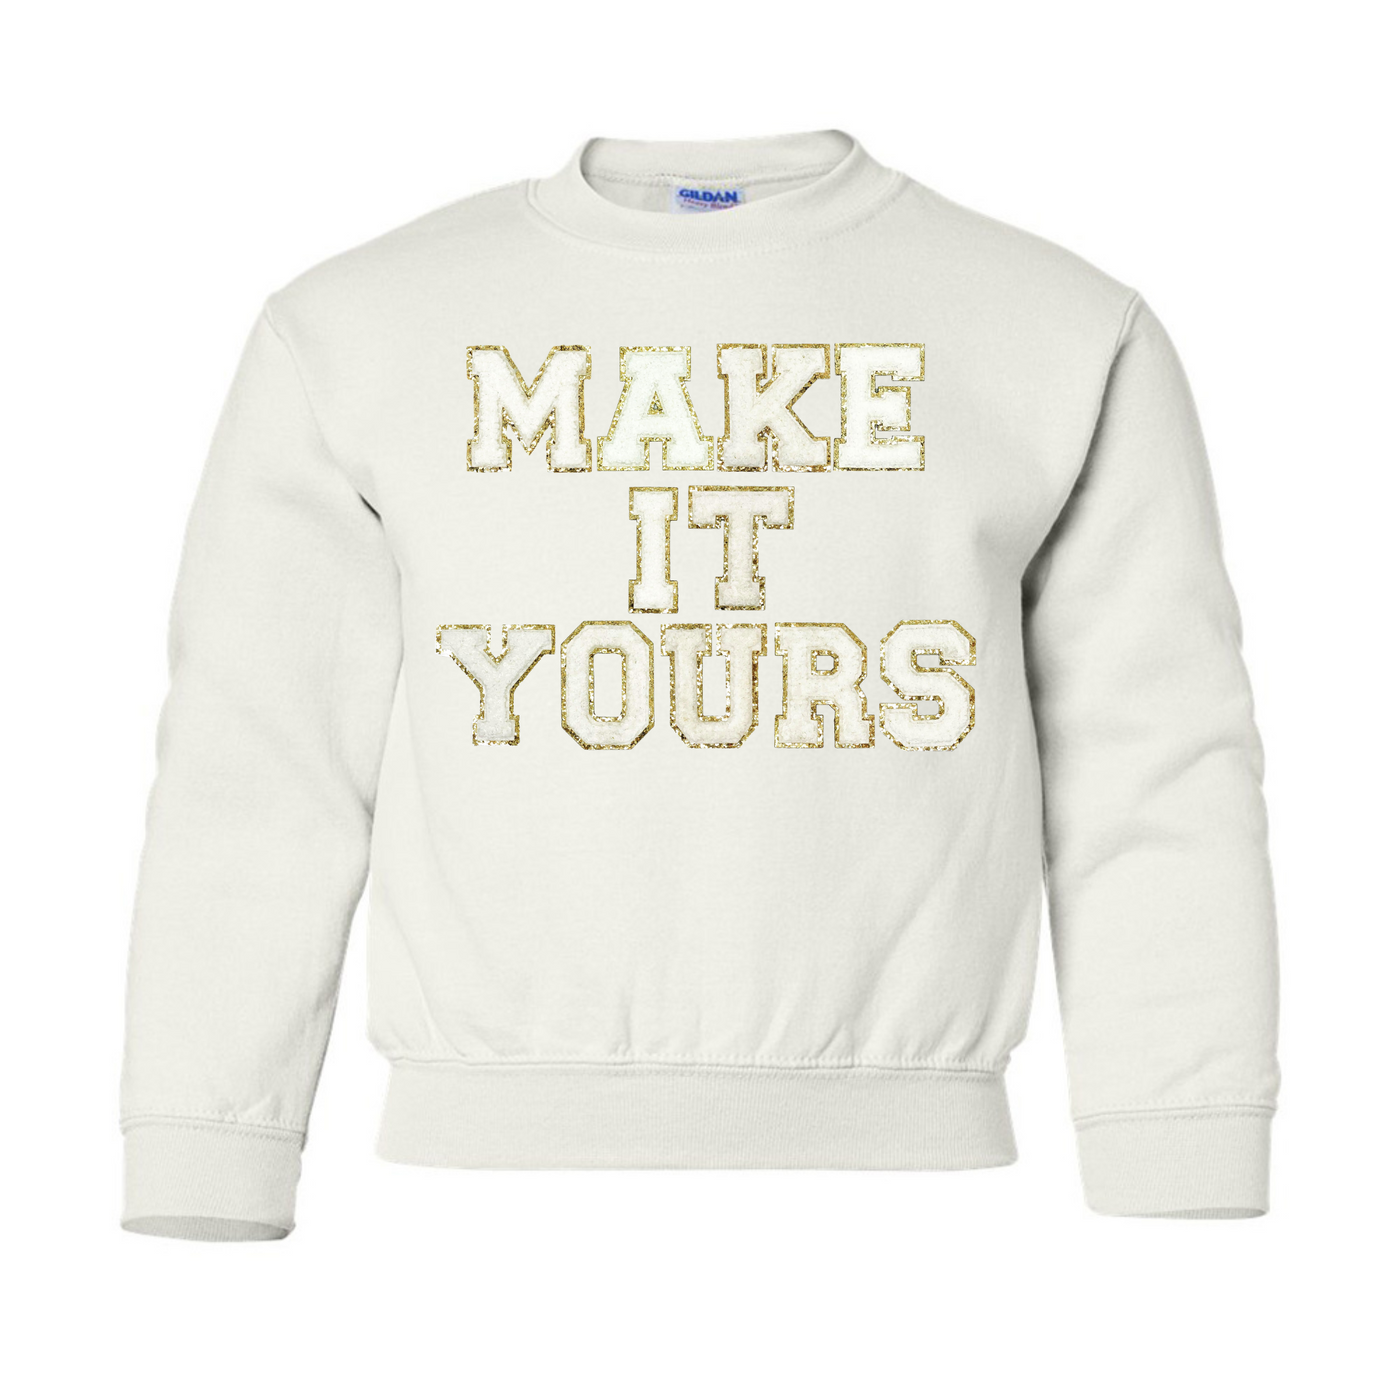 Make It Yours™ Kids Letter Patch Crewneck Sweatshirt